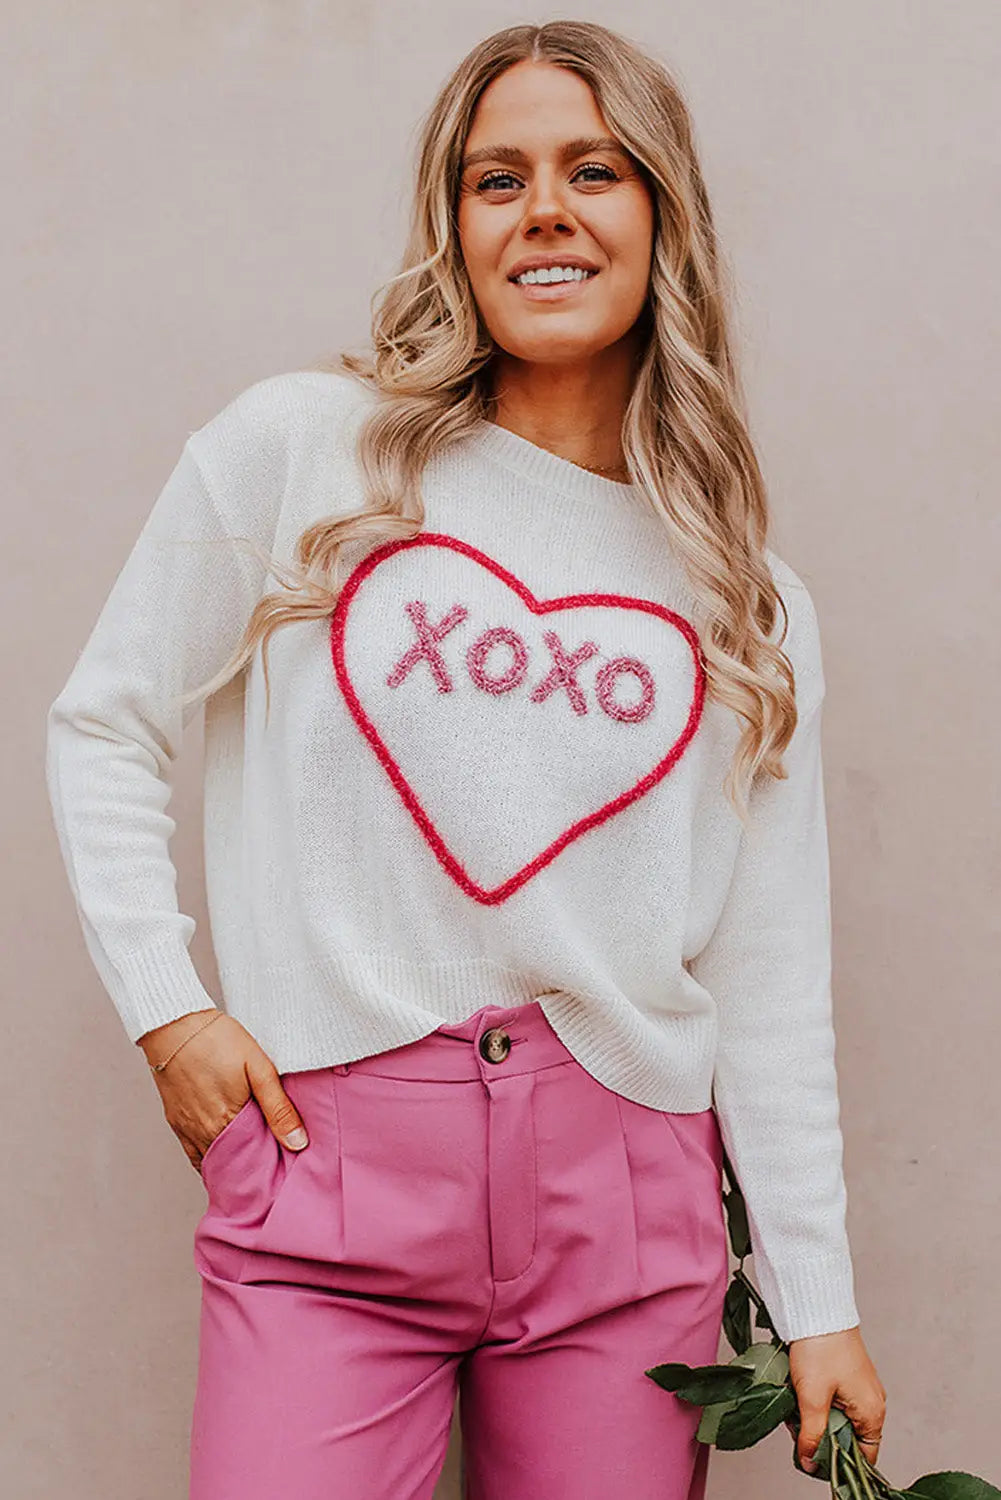 Rose heart xoxo pattern drop shoulder rib knit sweater - sweaters & cardigans